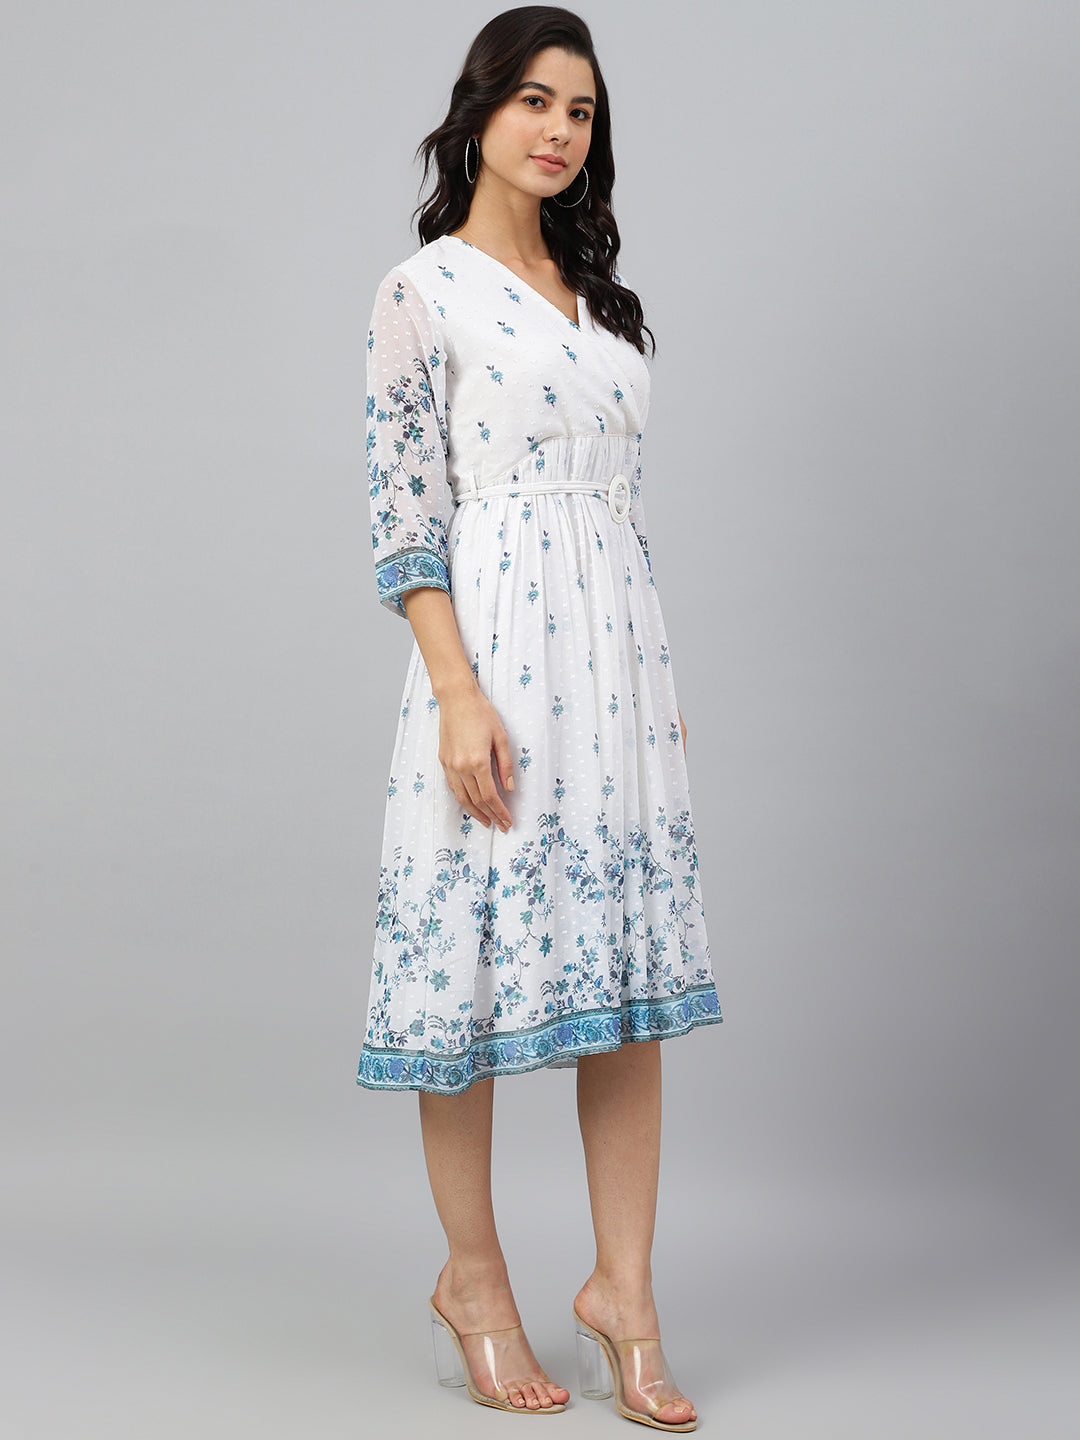 Women's Digital Printed White Georgette Dress - Janasya USA